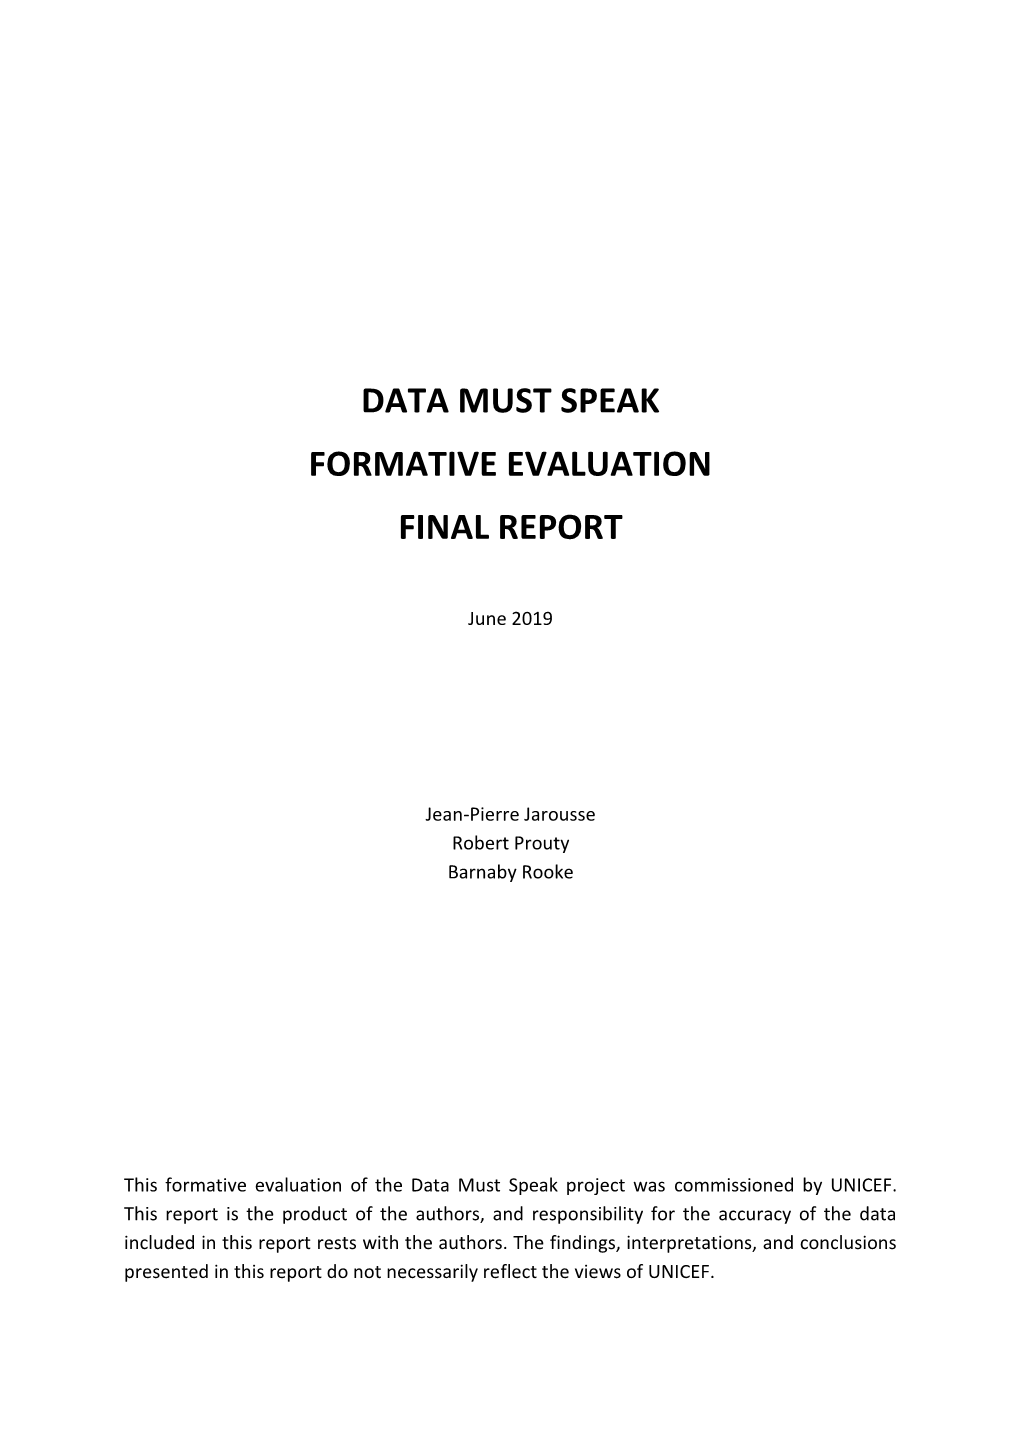 Data Must Speak Formative Evaluation Final Report